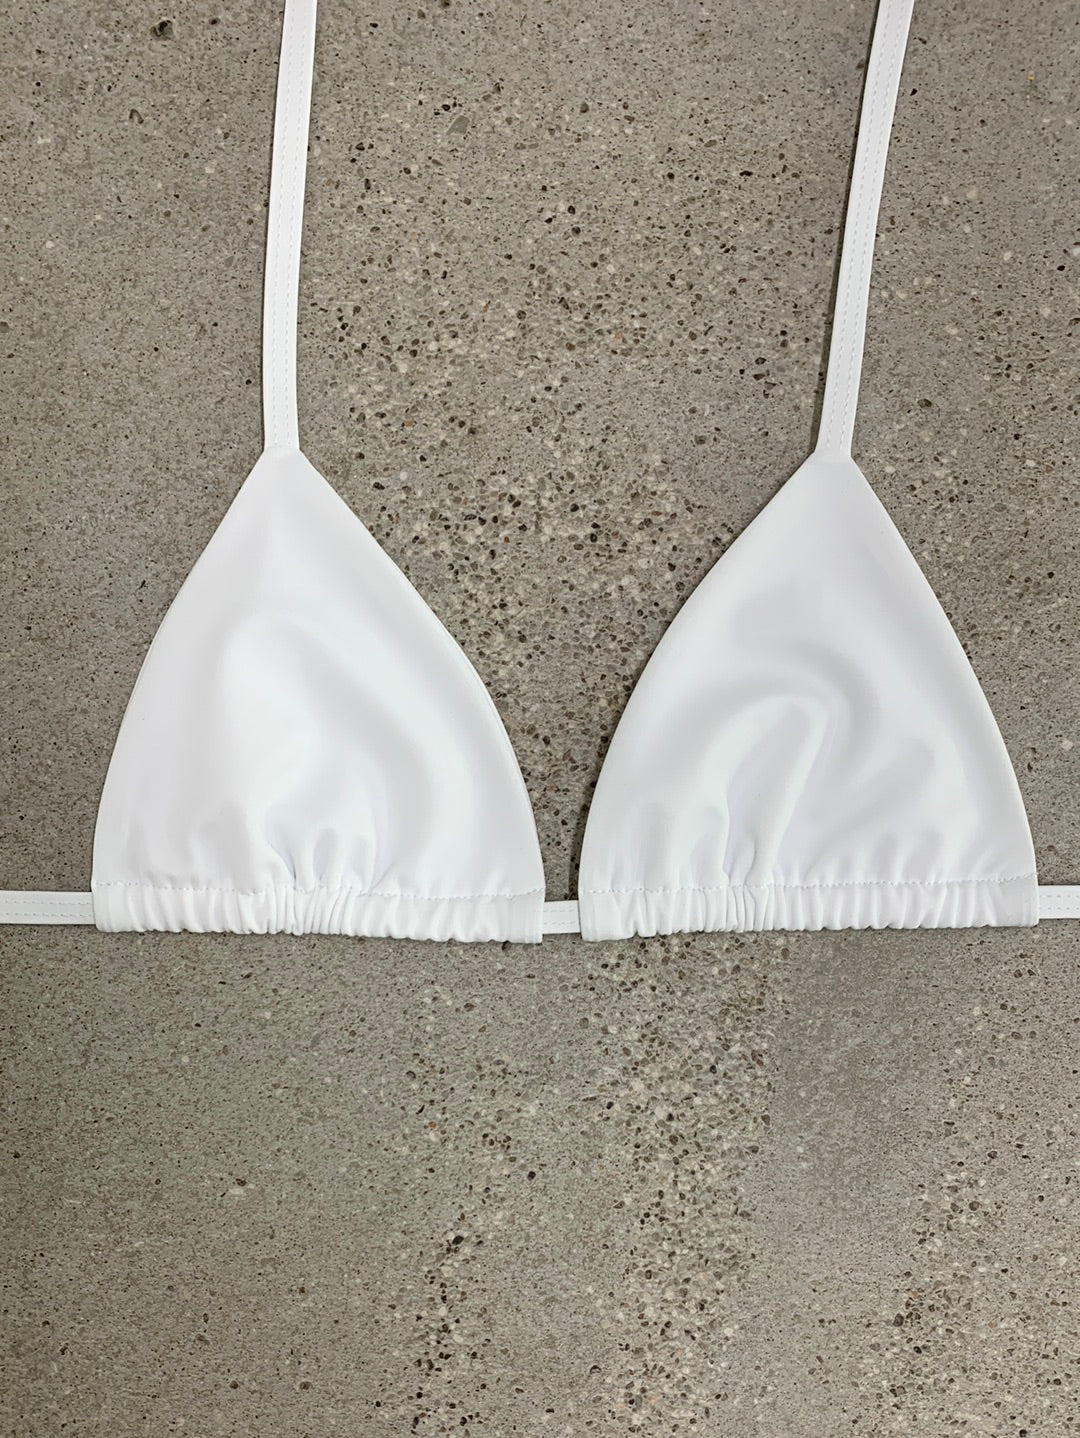 White Bikini Top